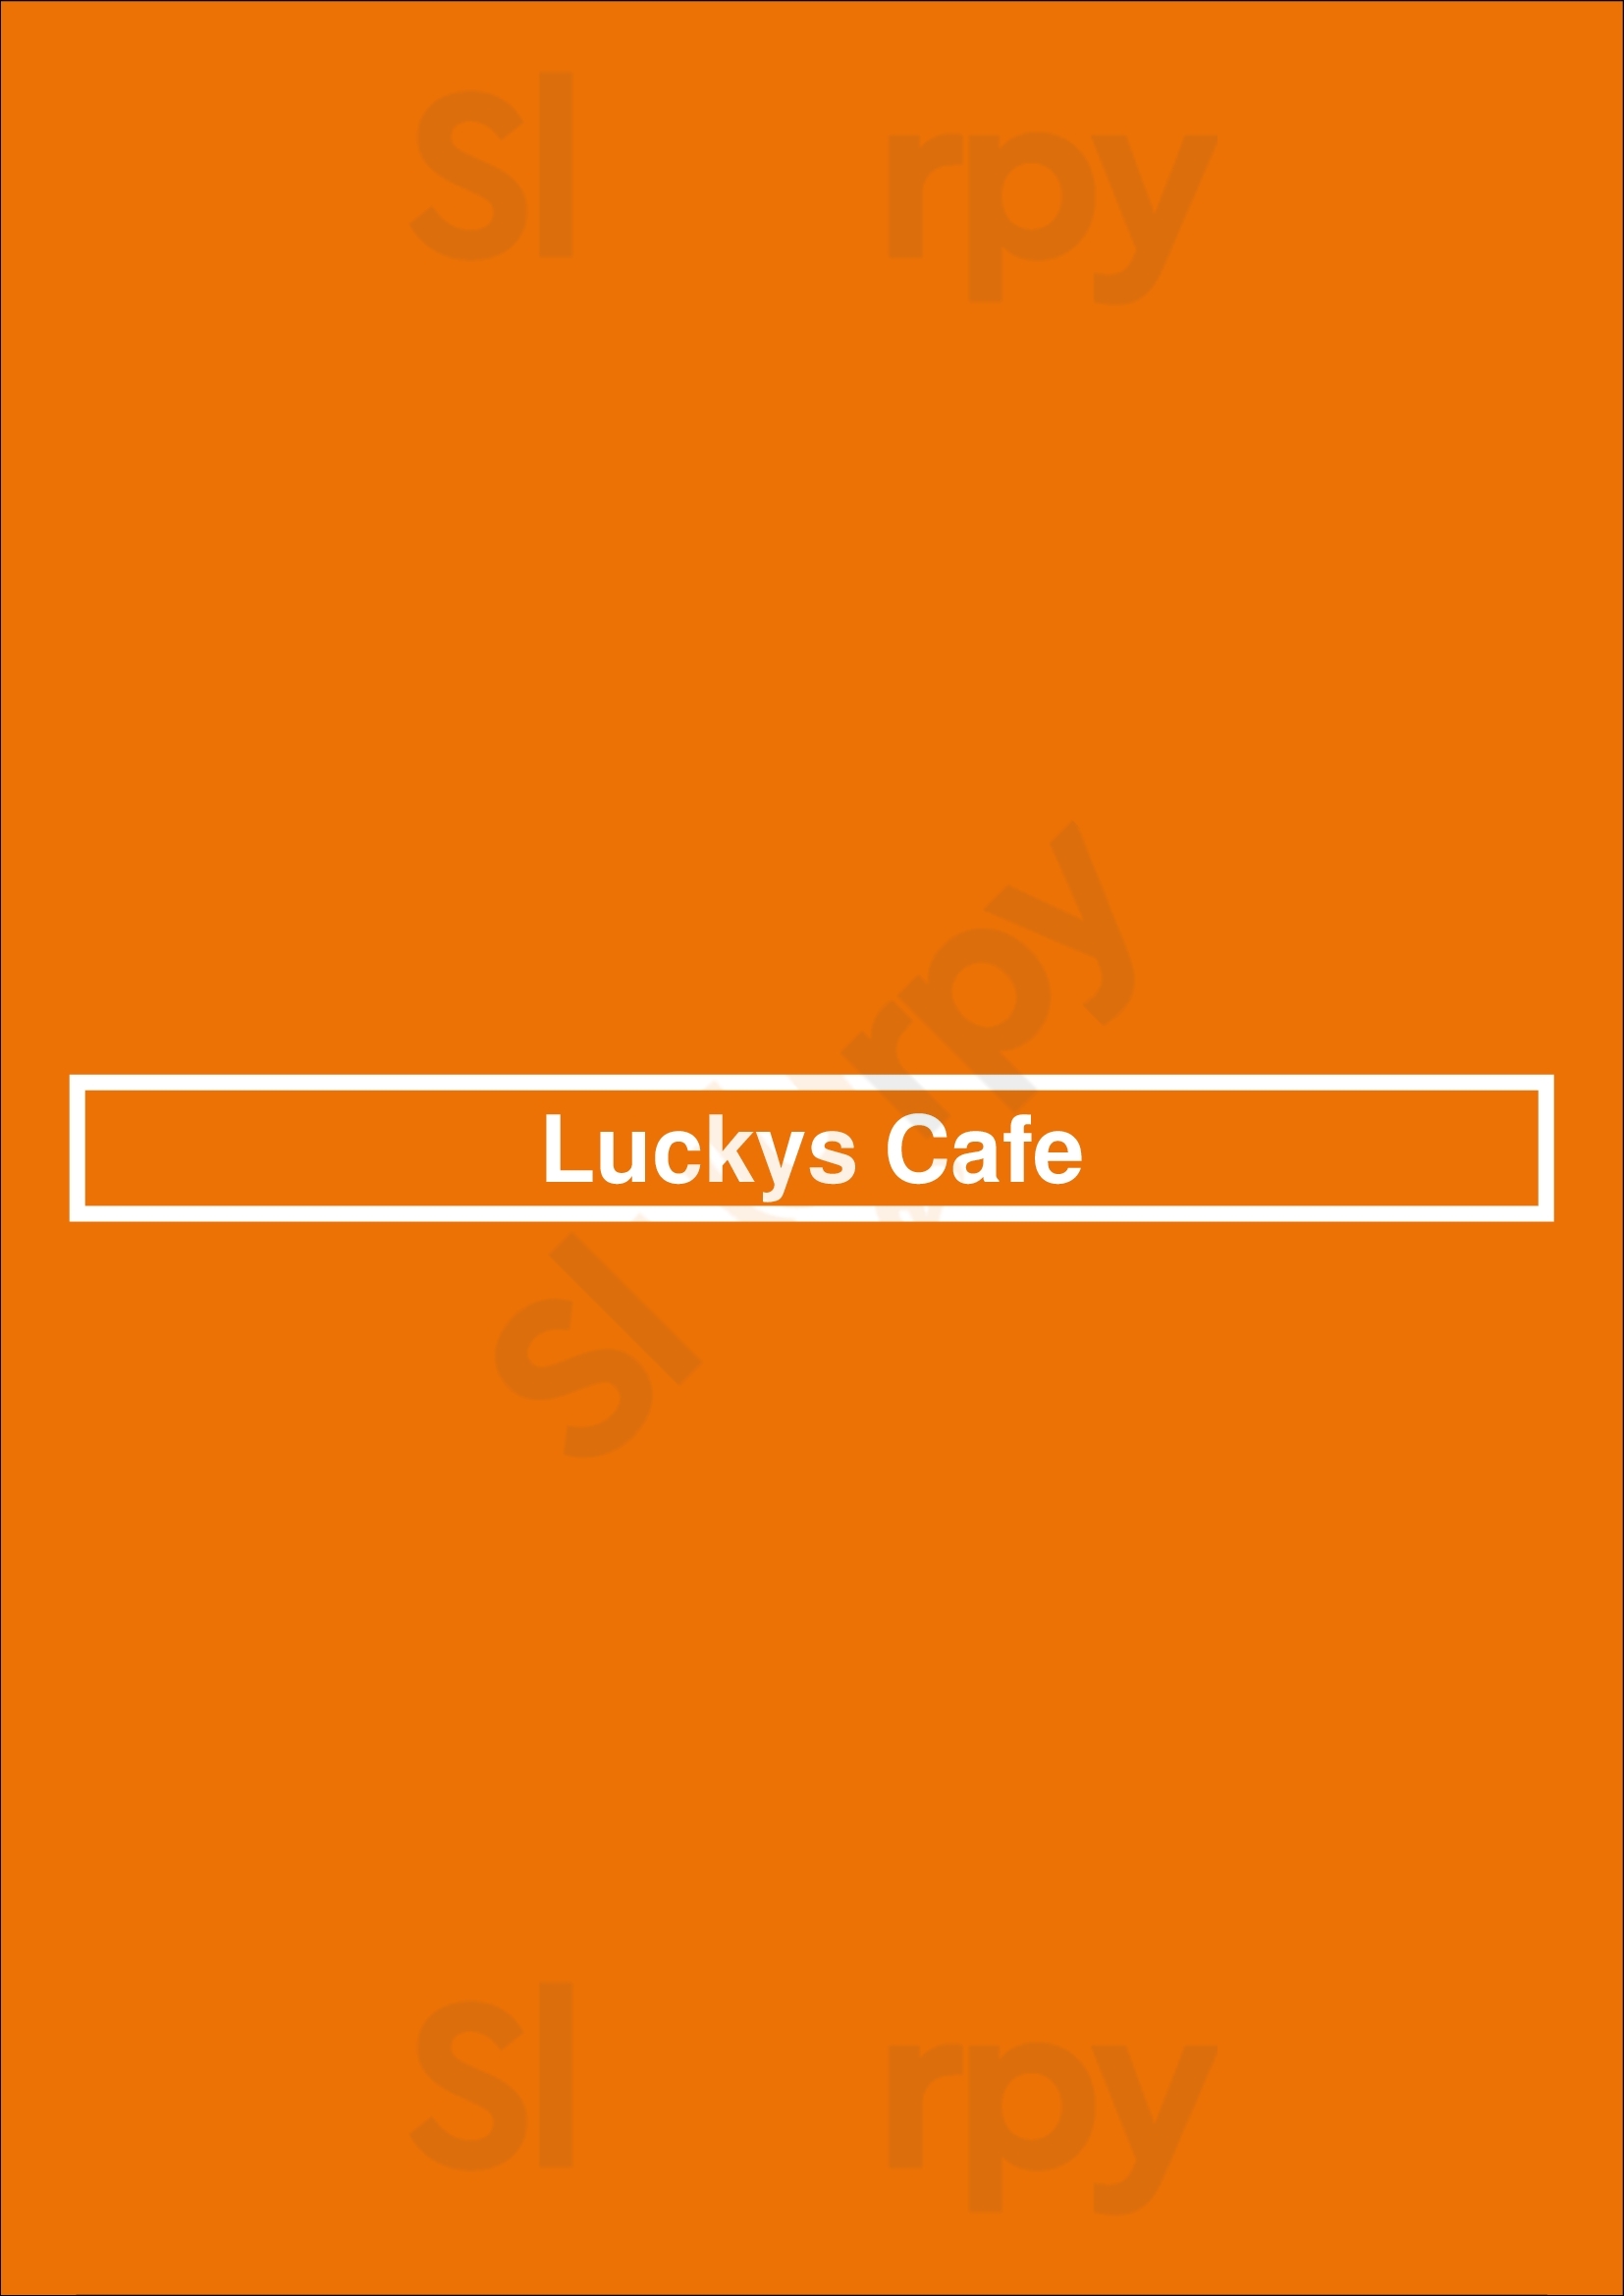 Luckys Cafe Dallas Menu - 1